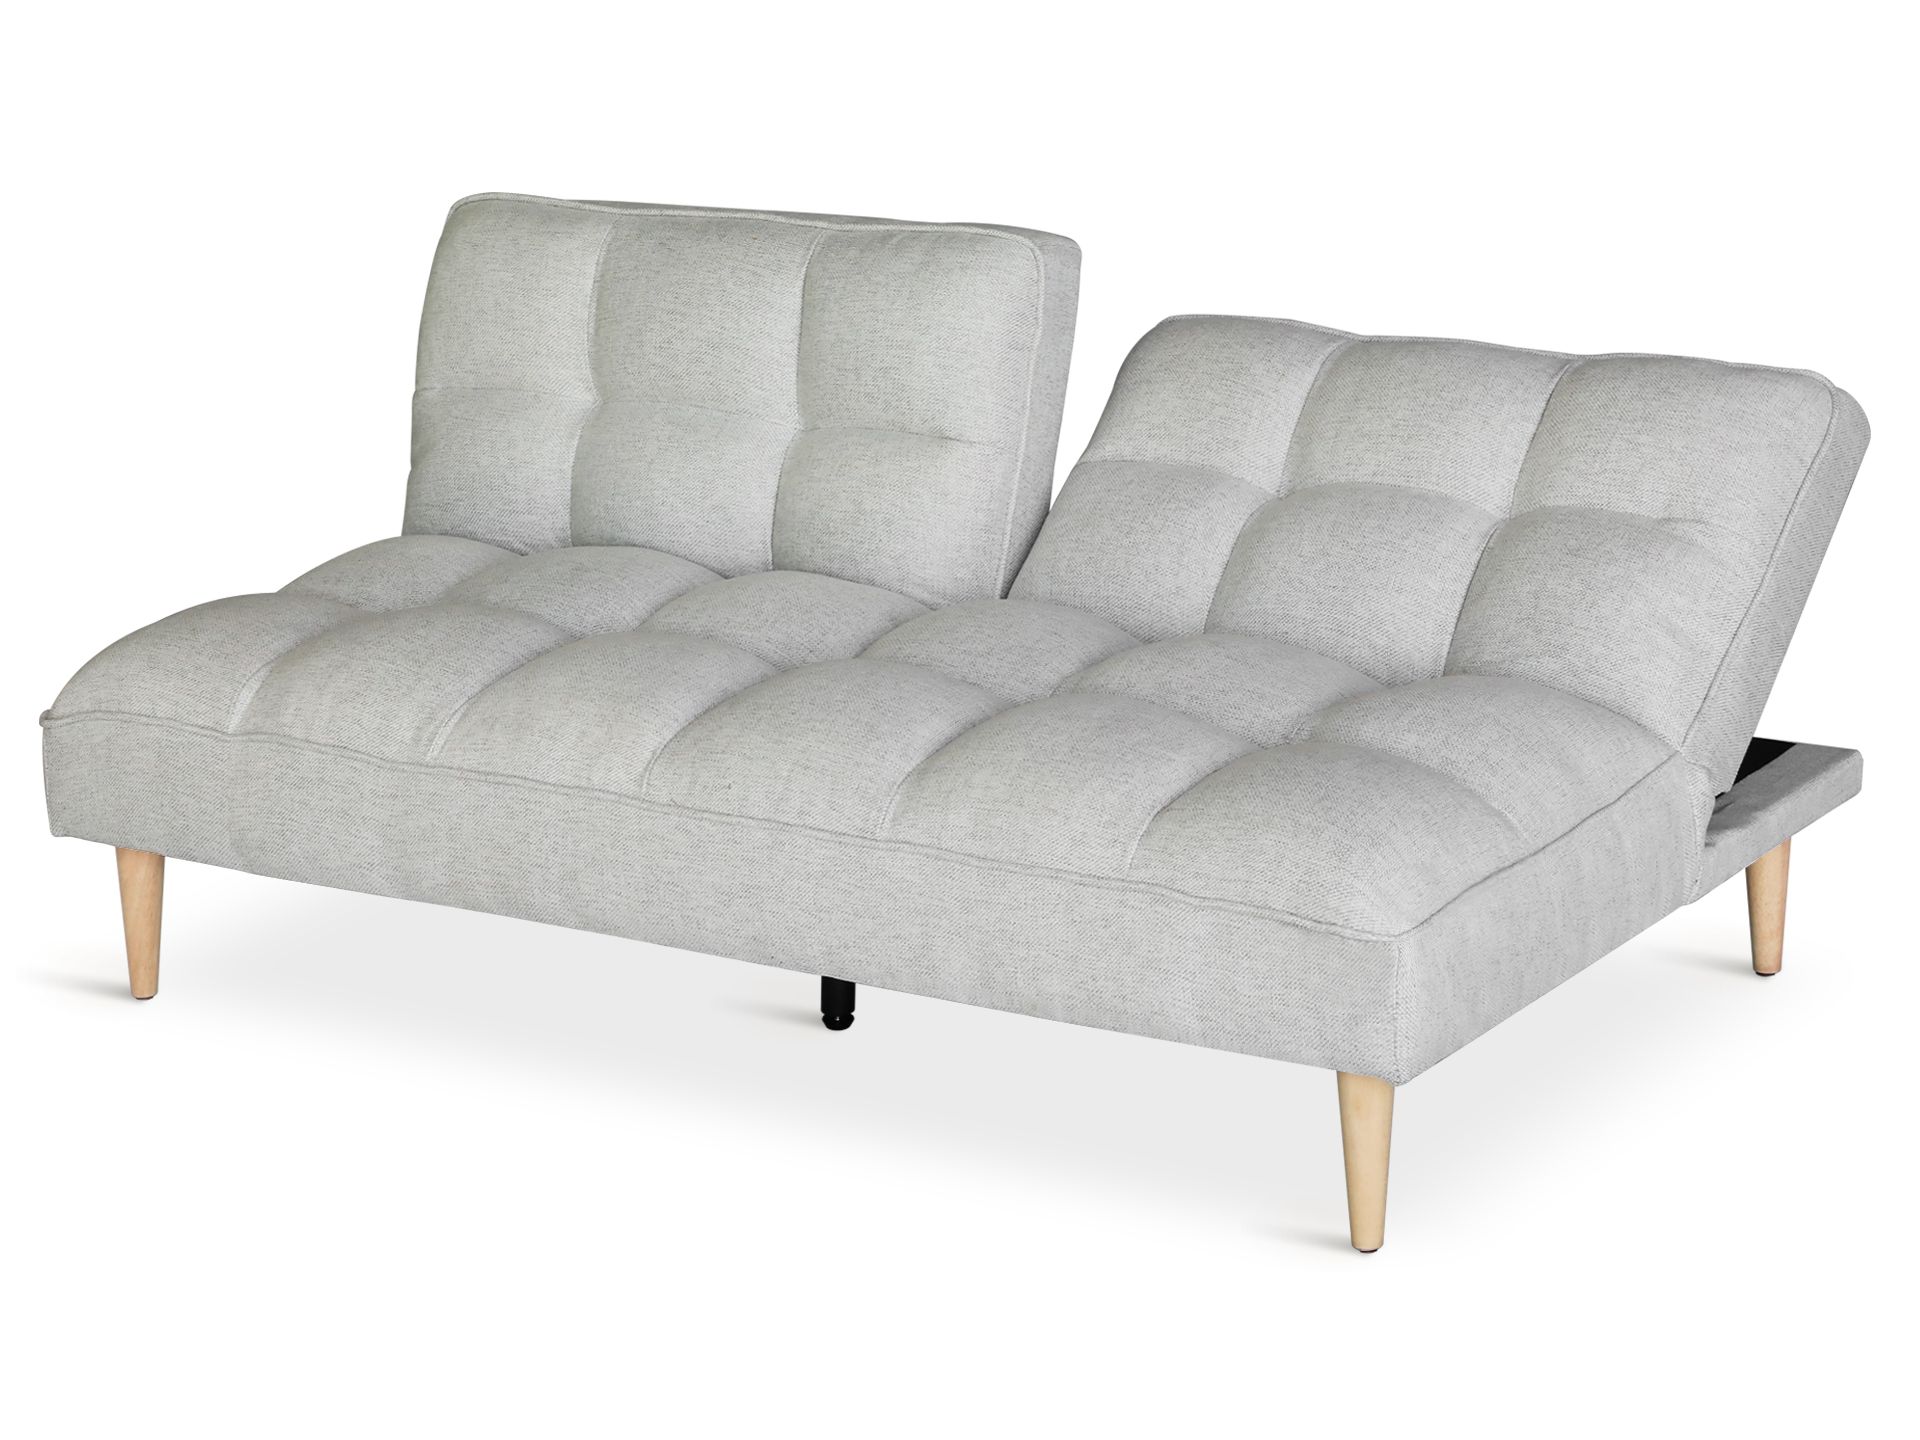 Barton 3 Seater Sofa Bed - Light Grey